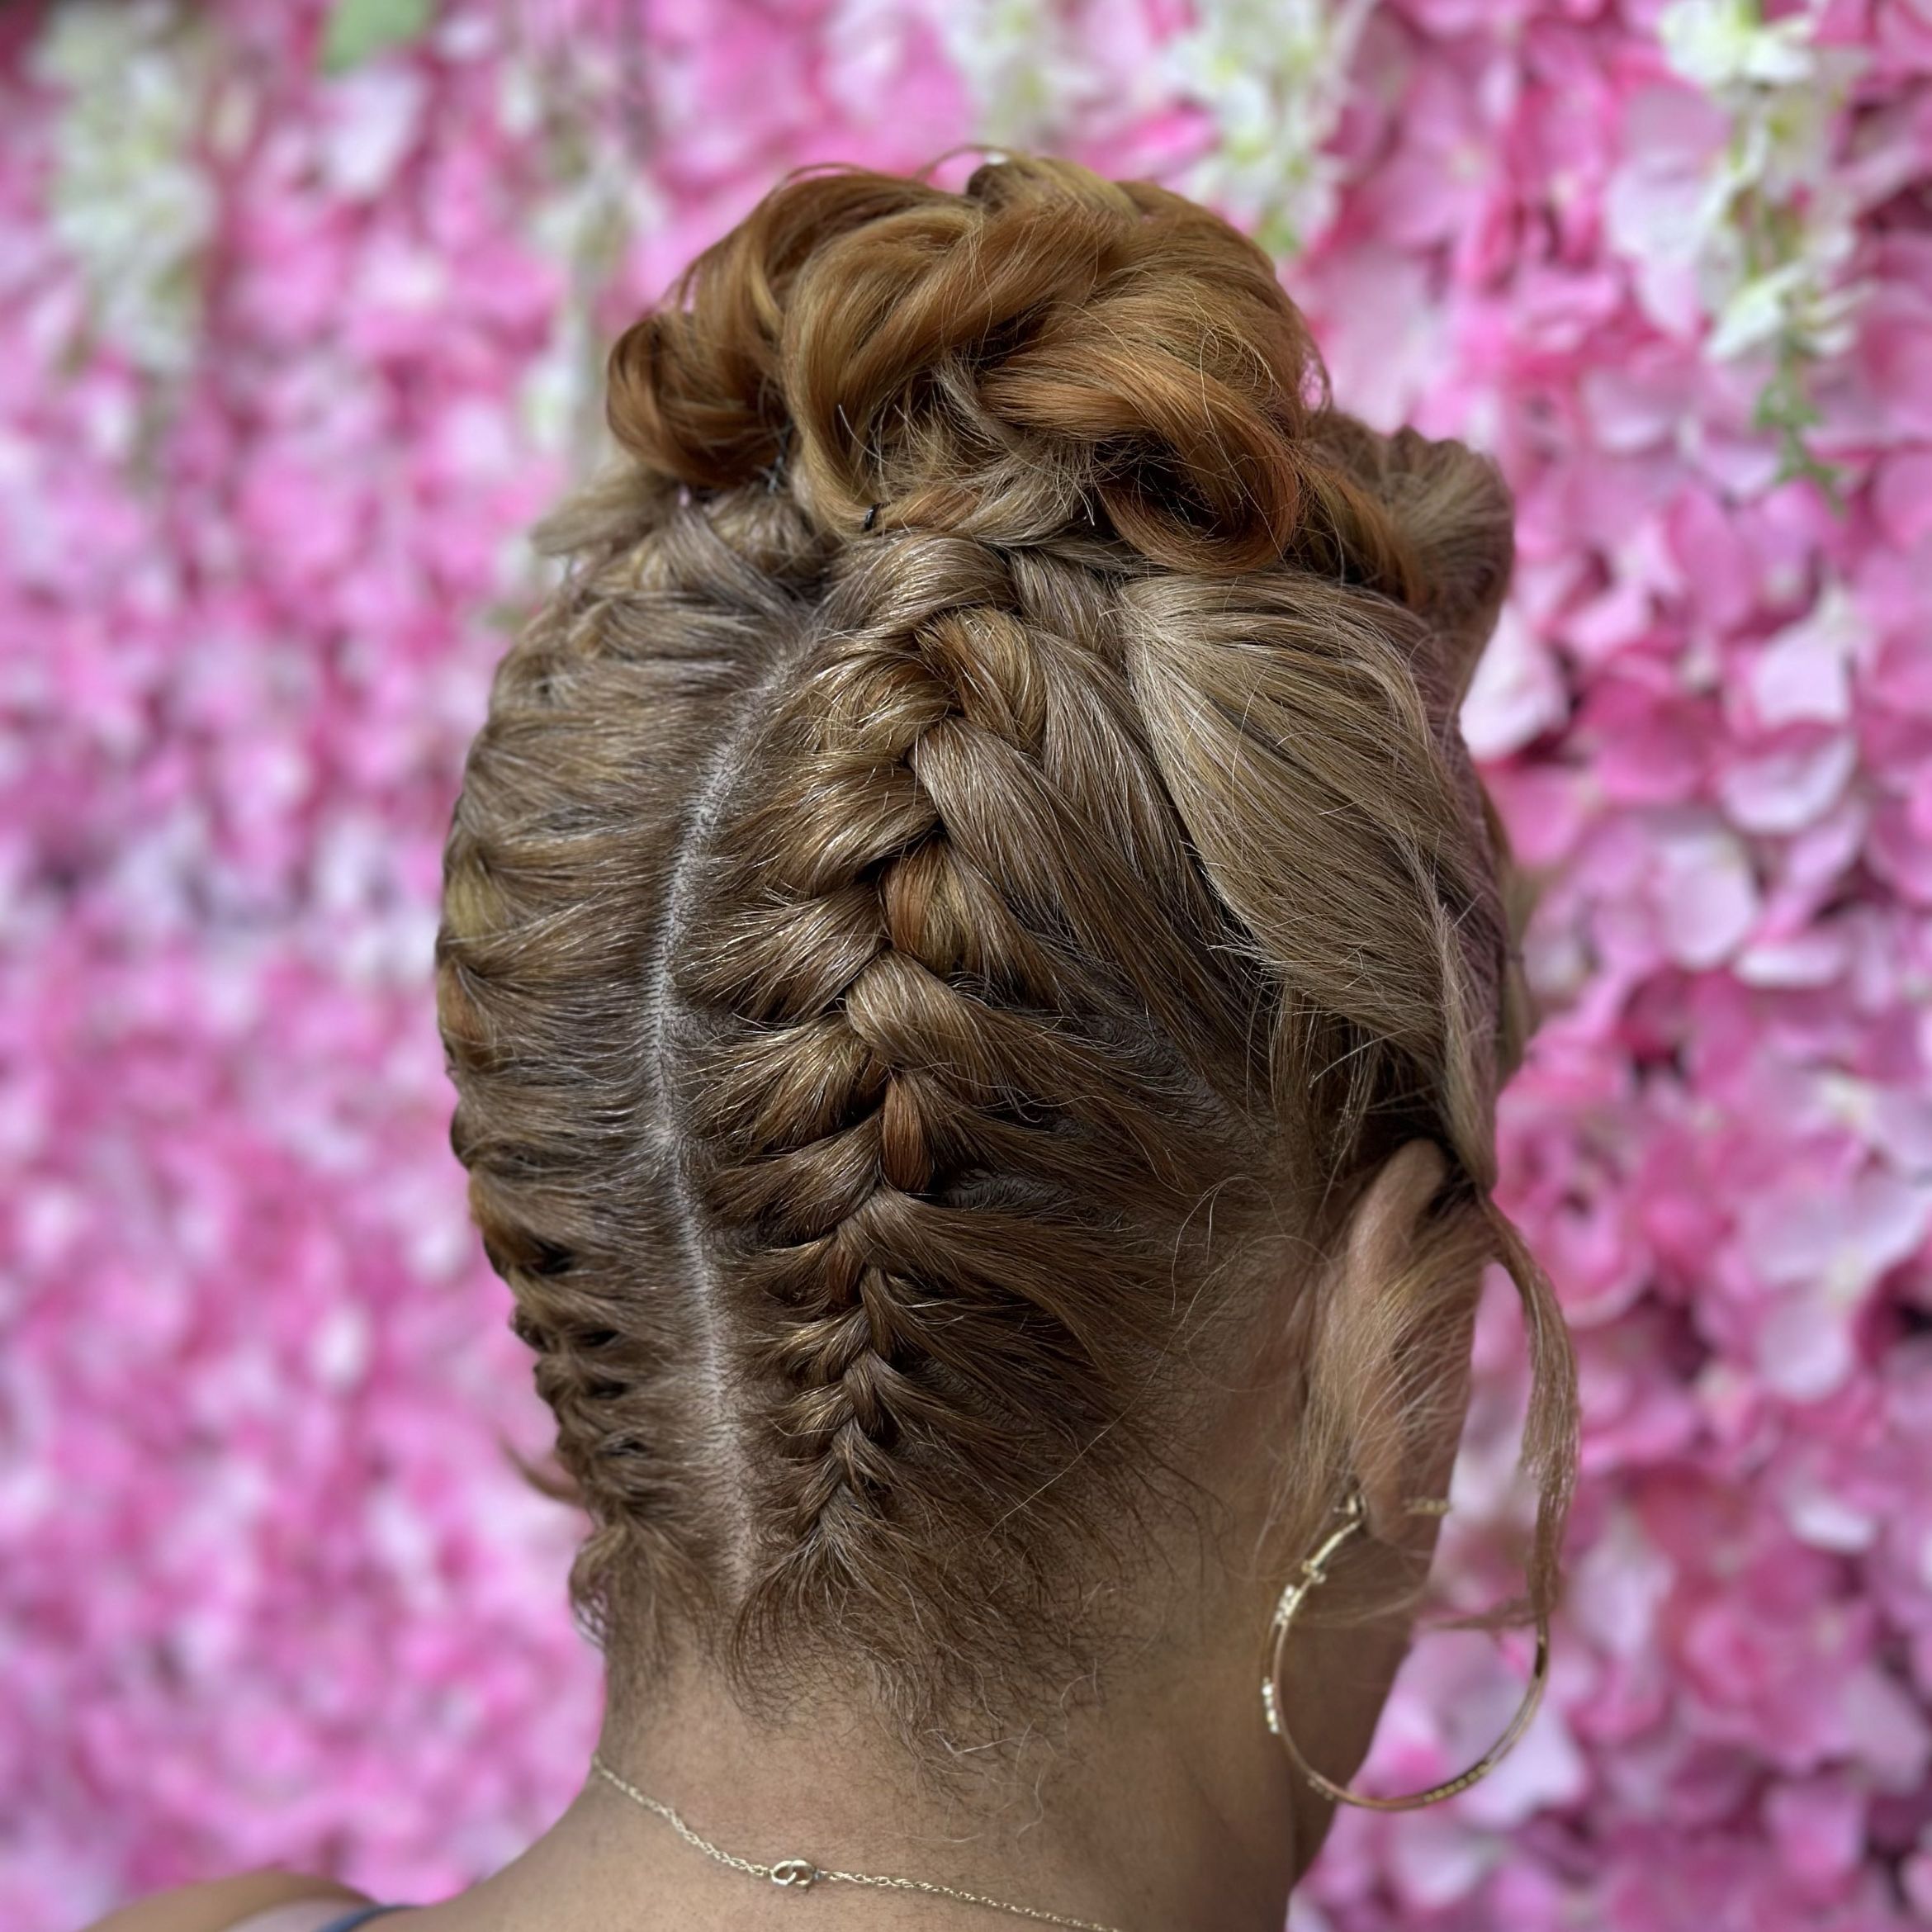 Bridal styles (including ponytails, curls, etc) portfolio